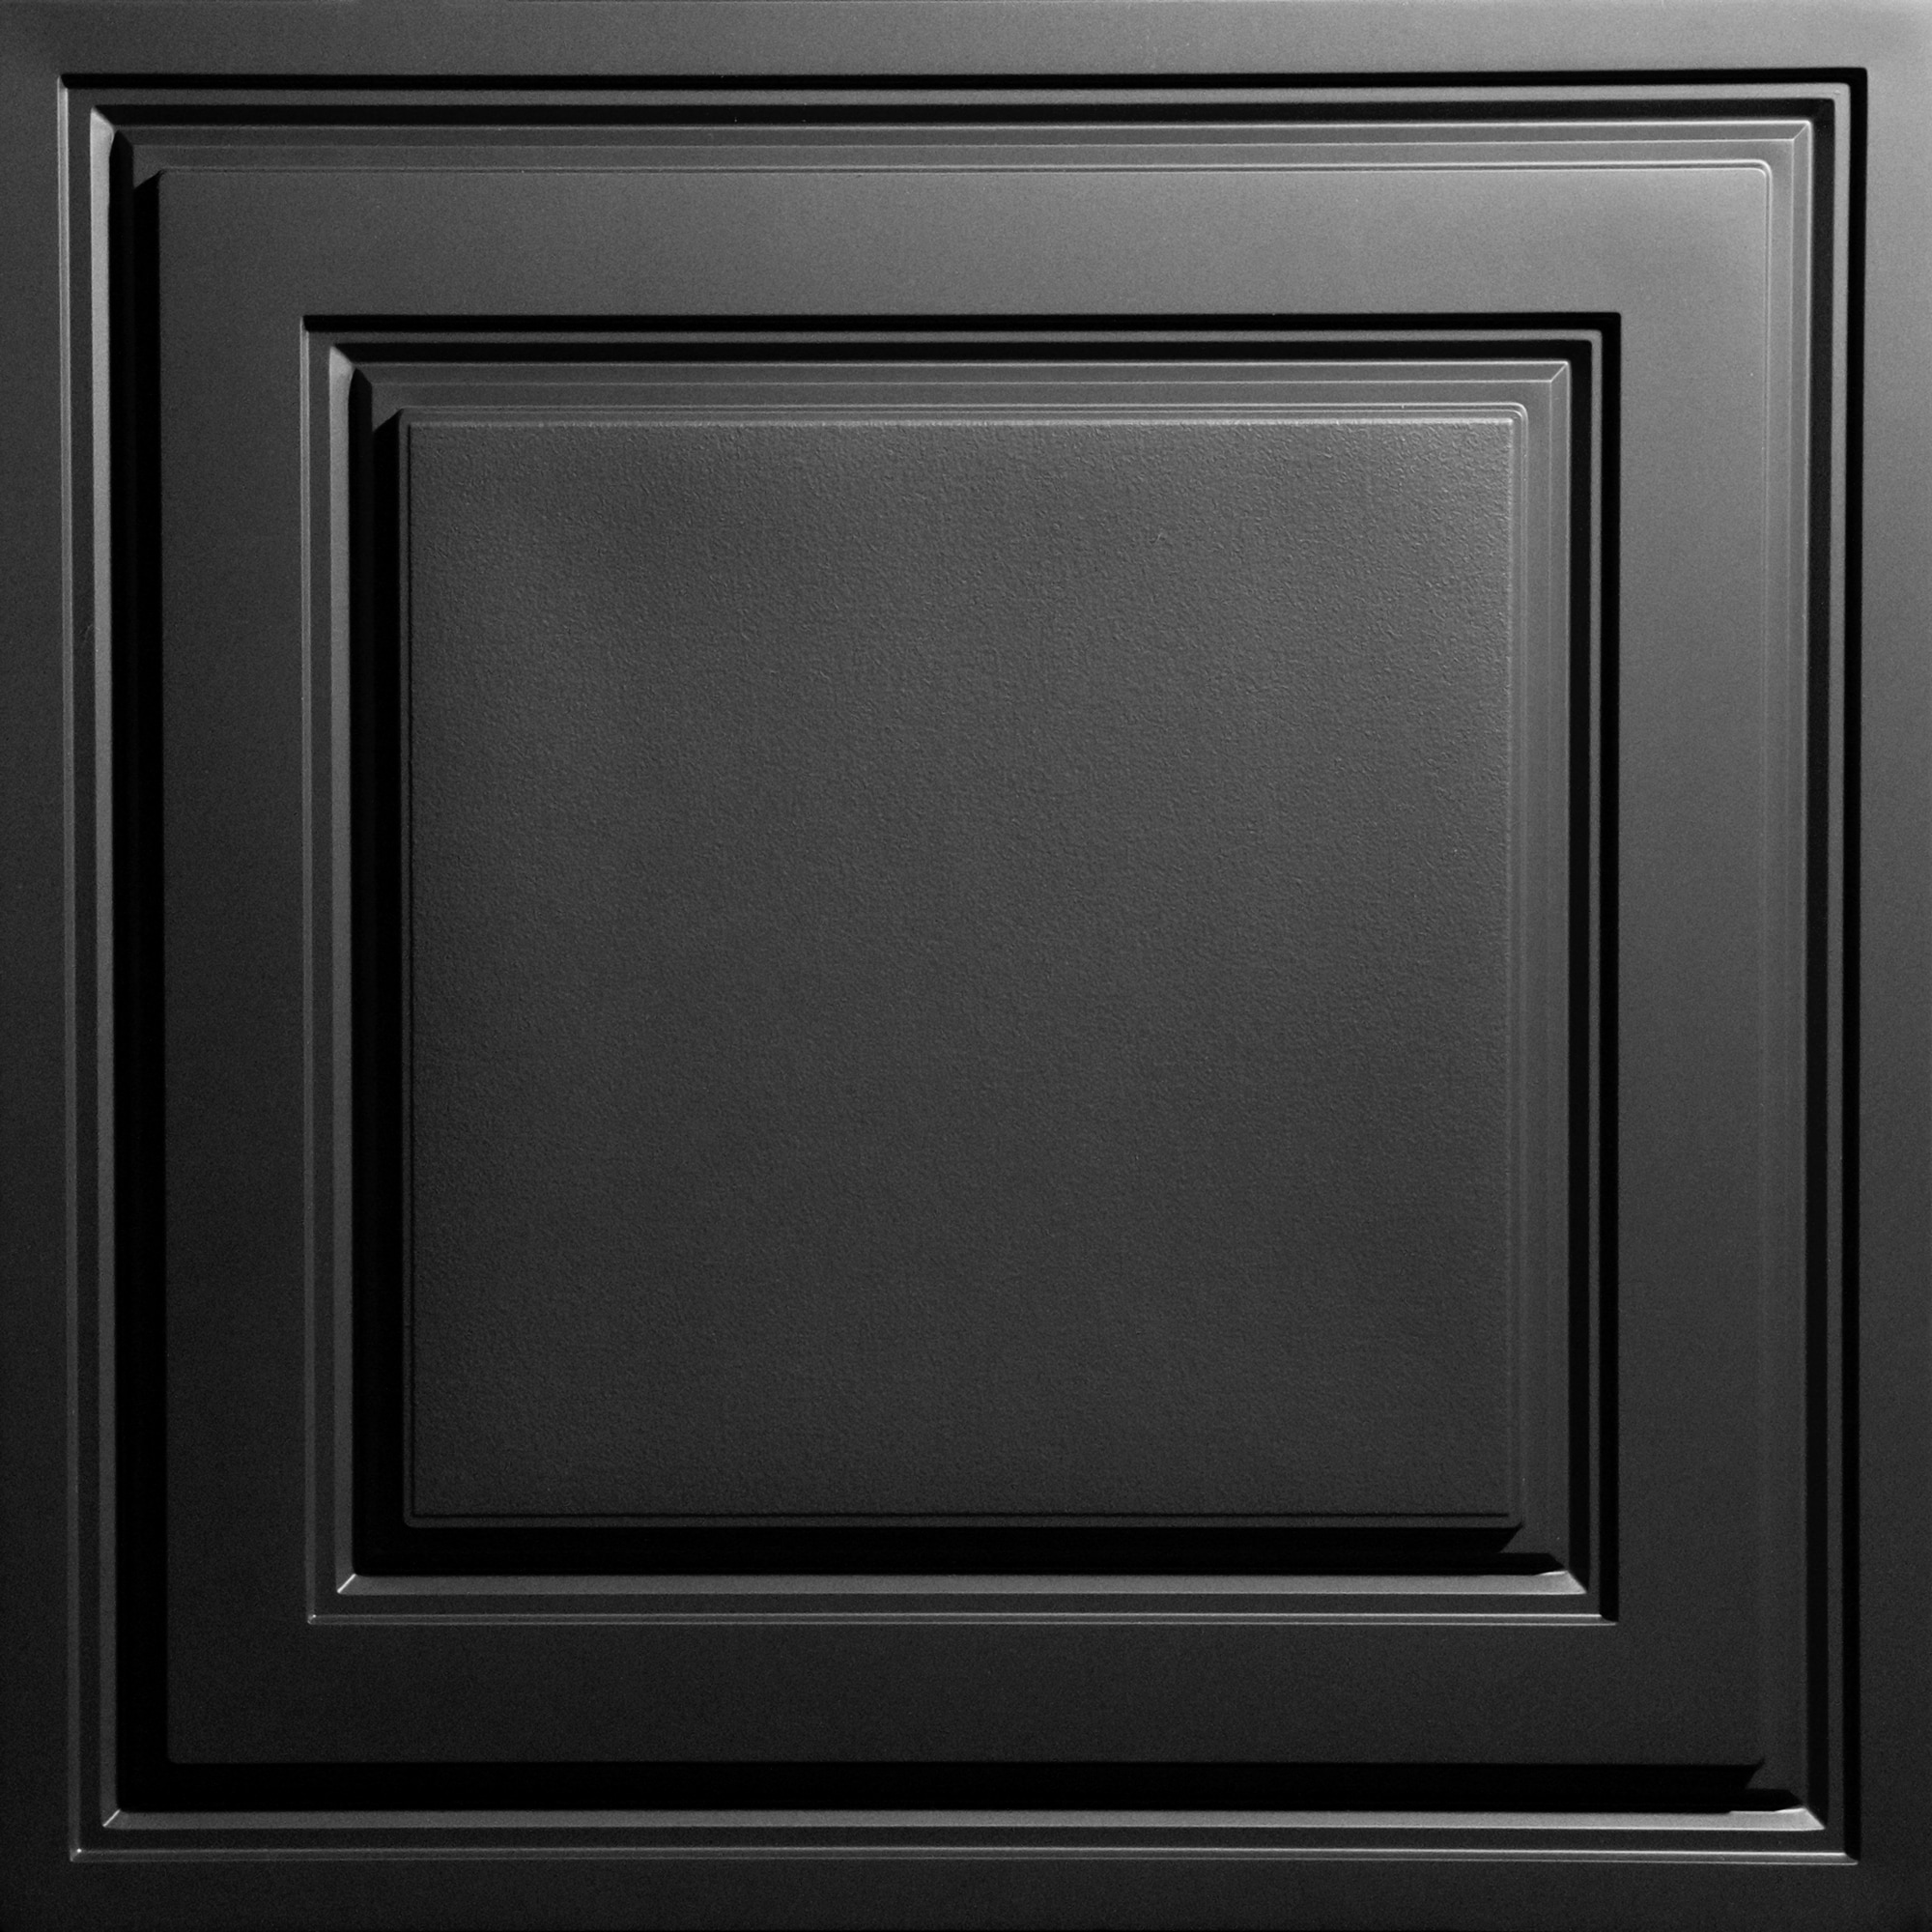 Ceilume Stratford Black Feather Light 2, Stratford Ceiling Tiles Reviews